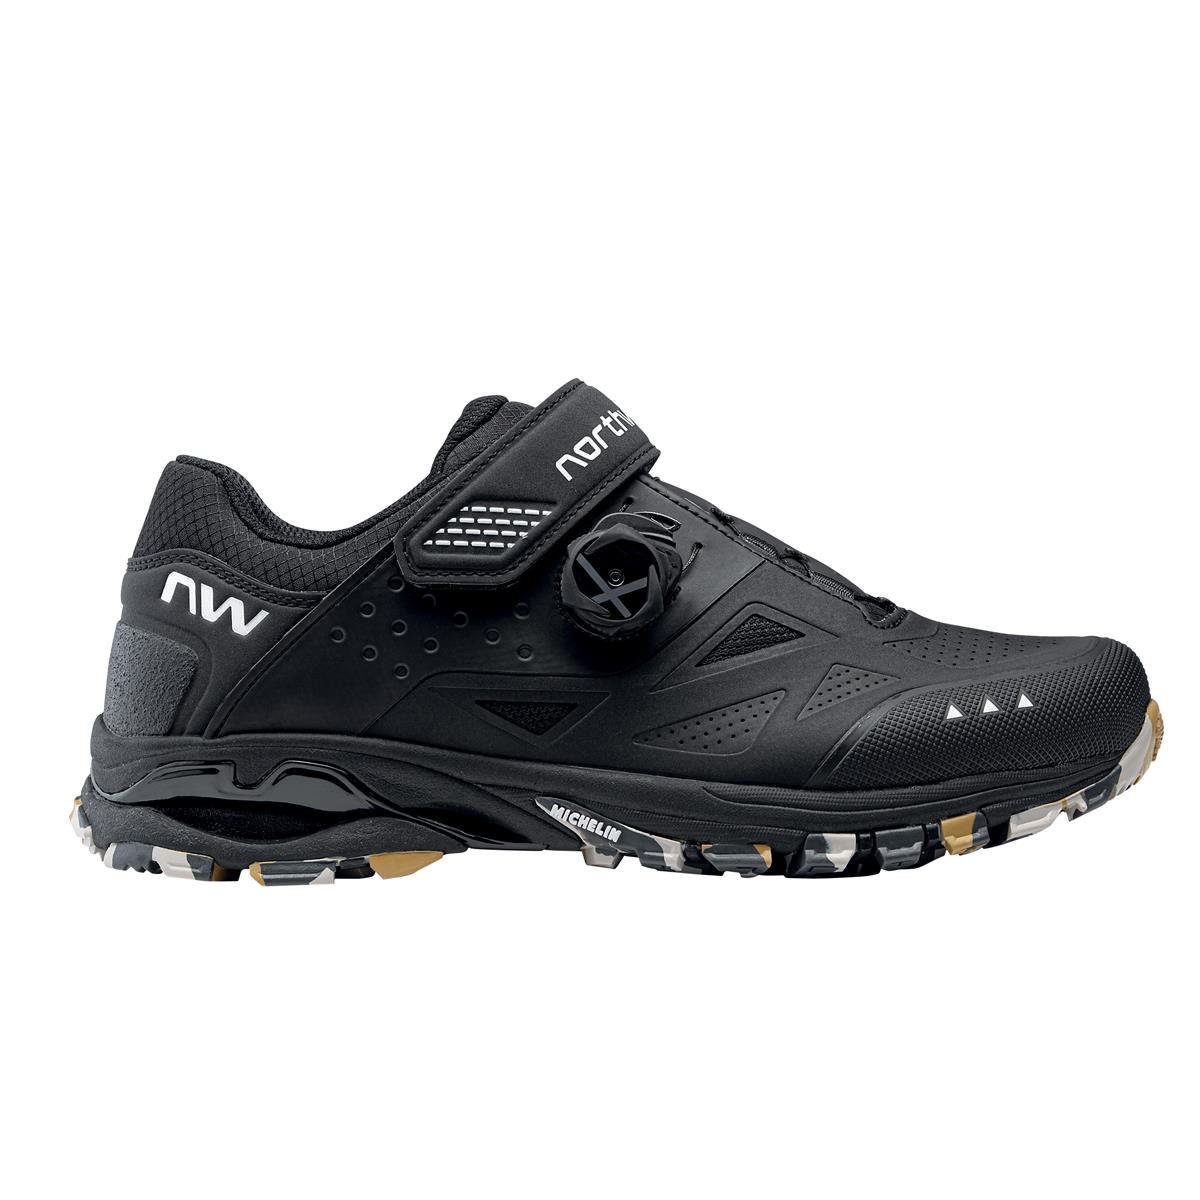 Northwave MTB Shoes Spider Plus 3 Black/Camo